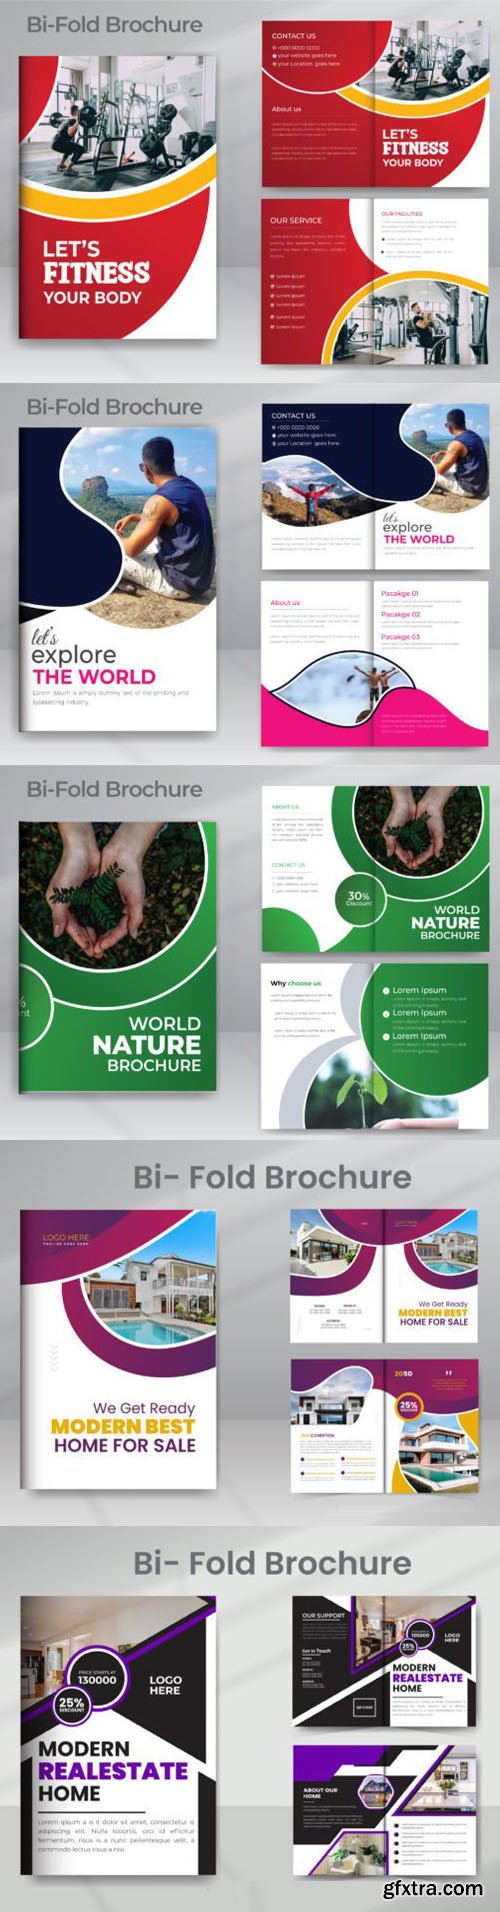 5 Bi-Fold Brochures Templates for Illustrator